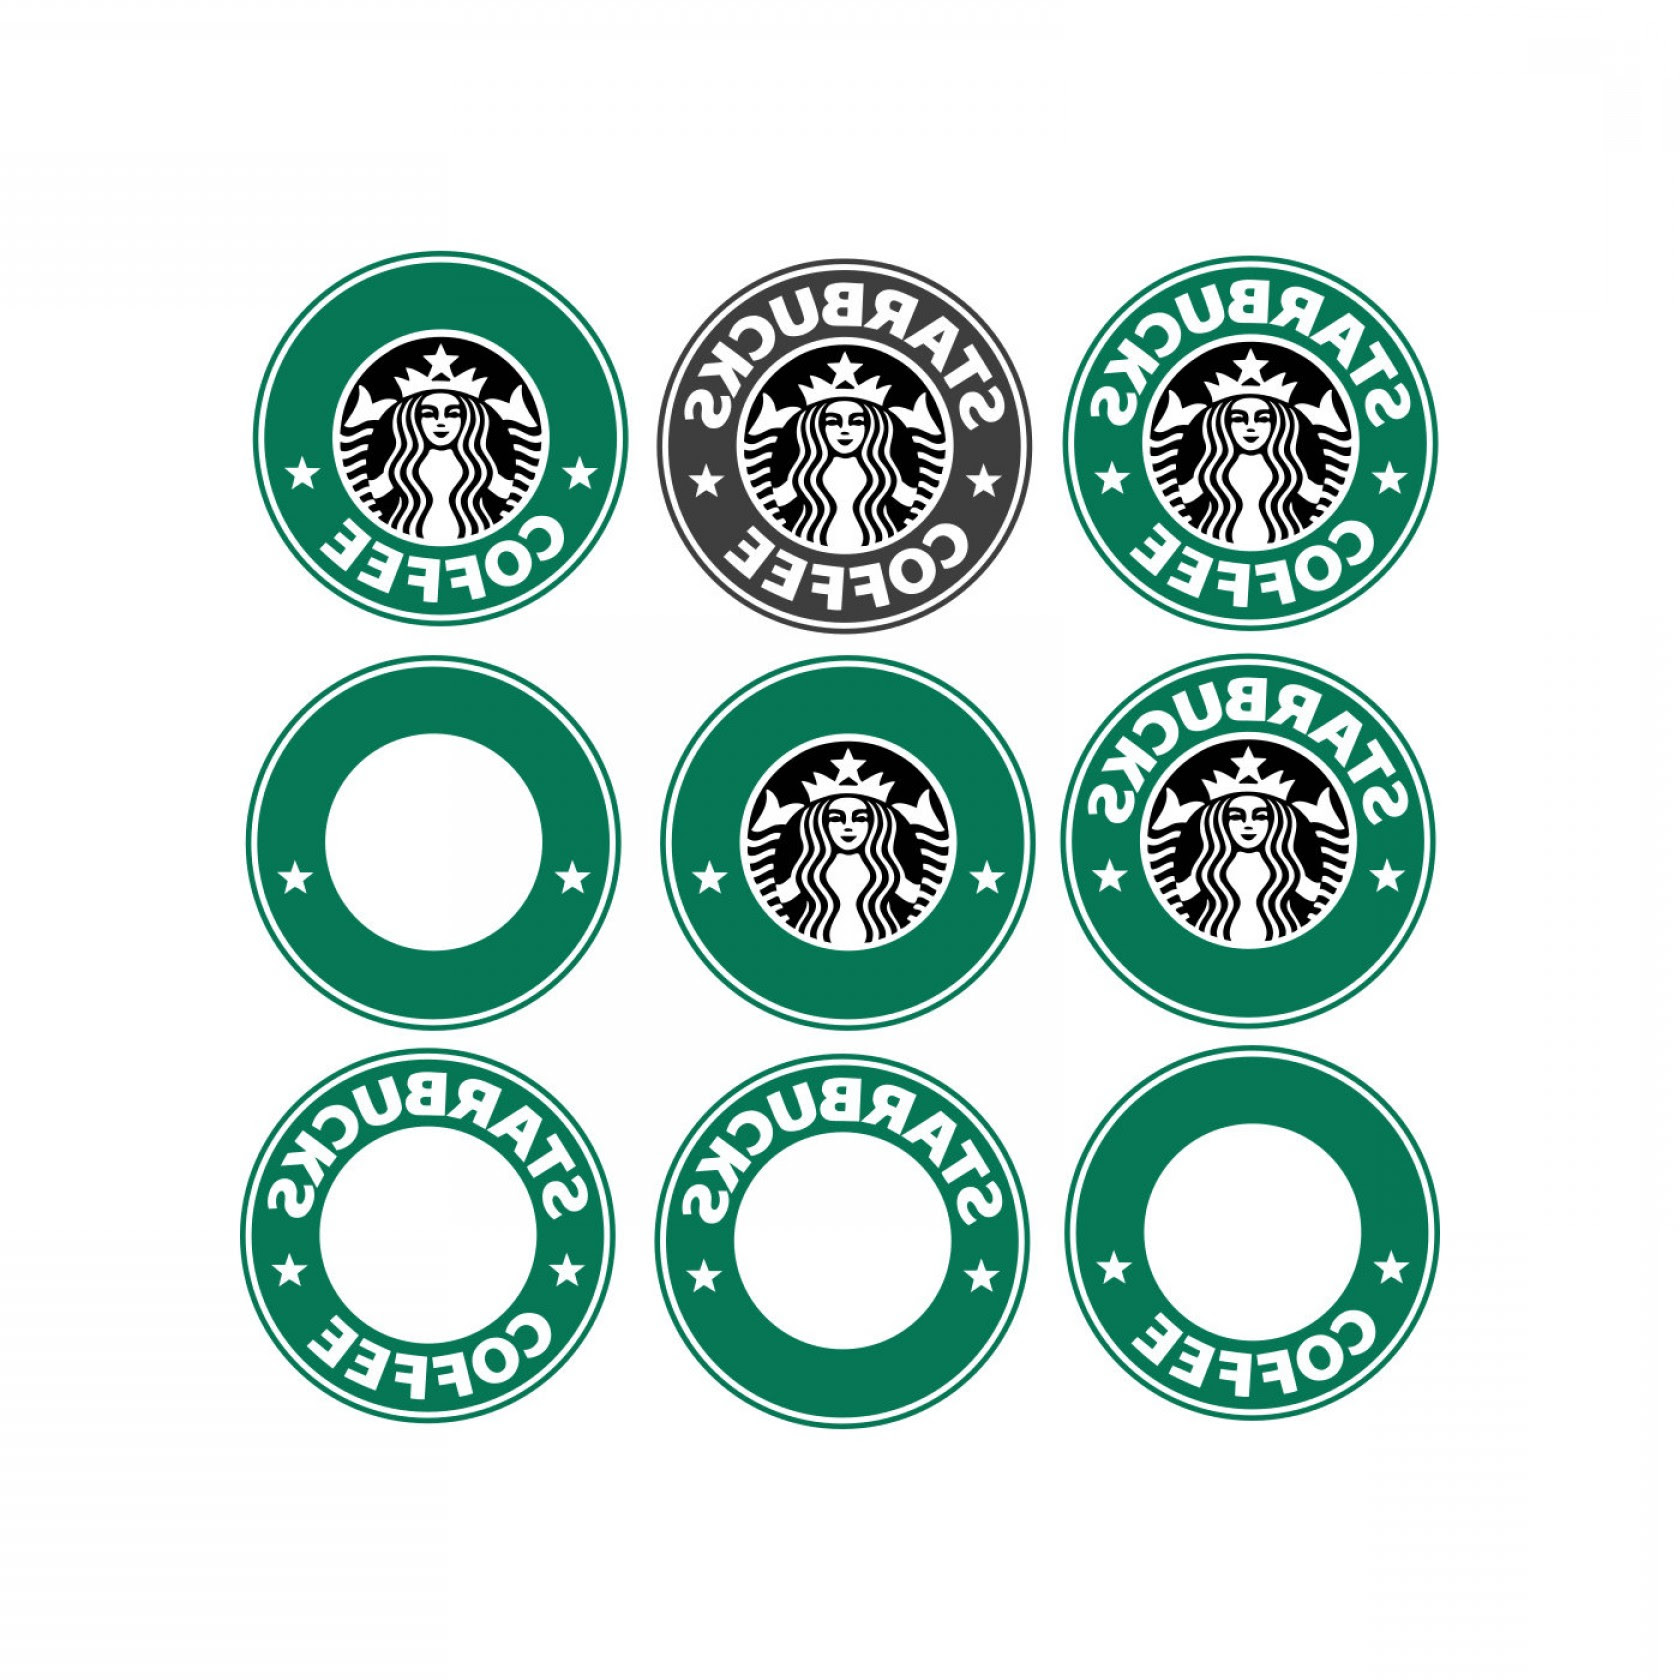 Starbucks Logo Decal